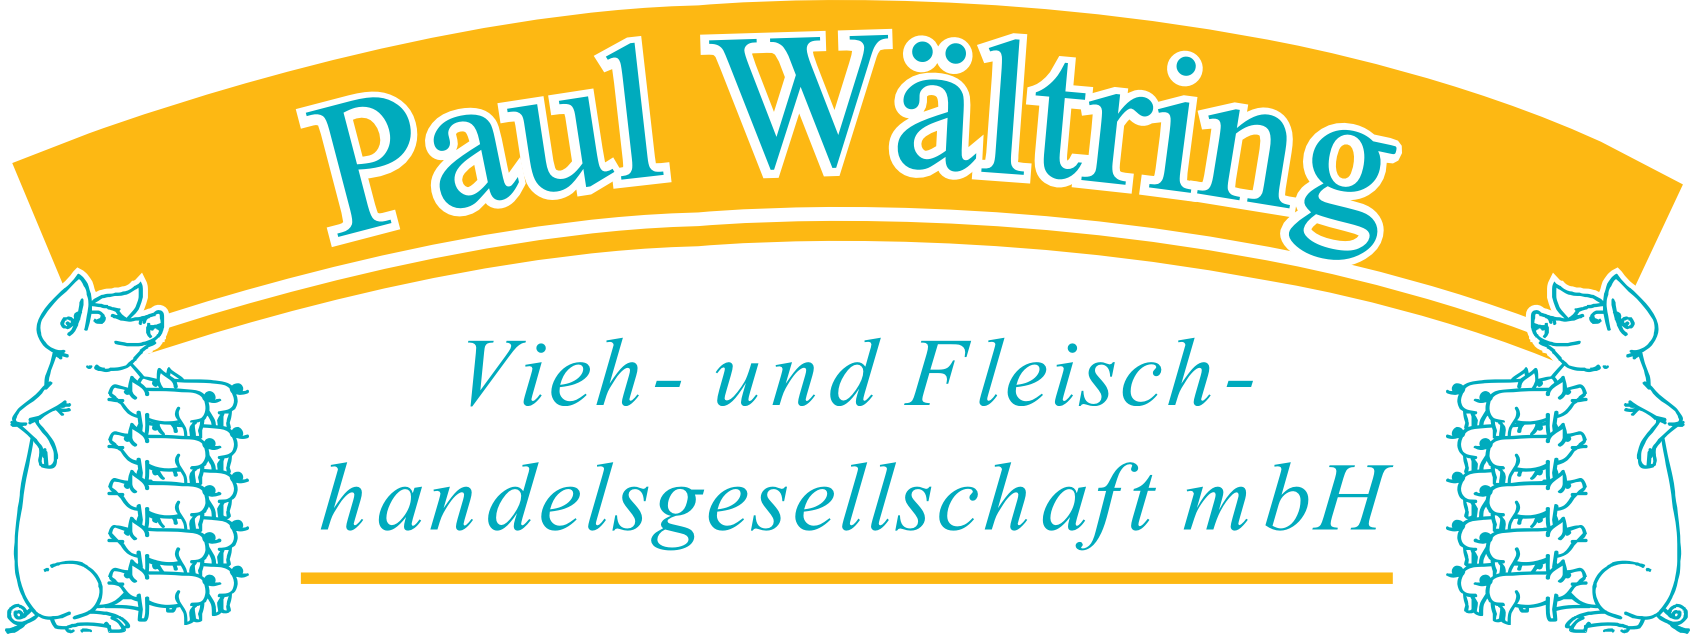 Paul Wältring Logo